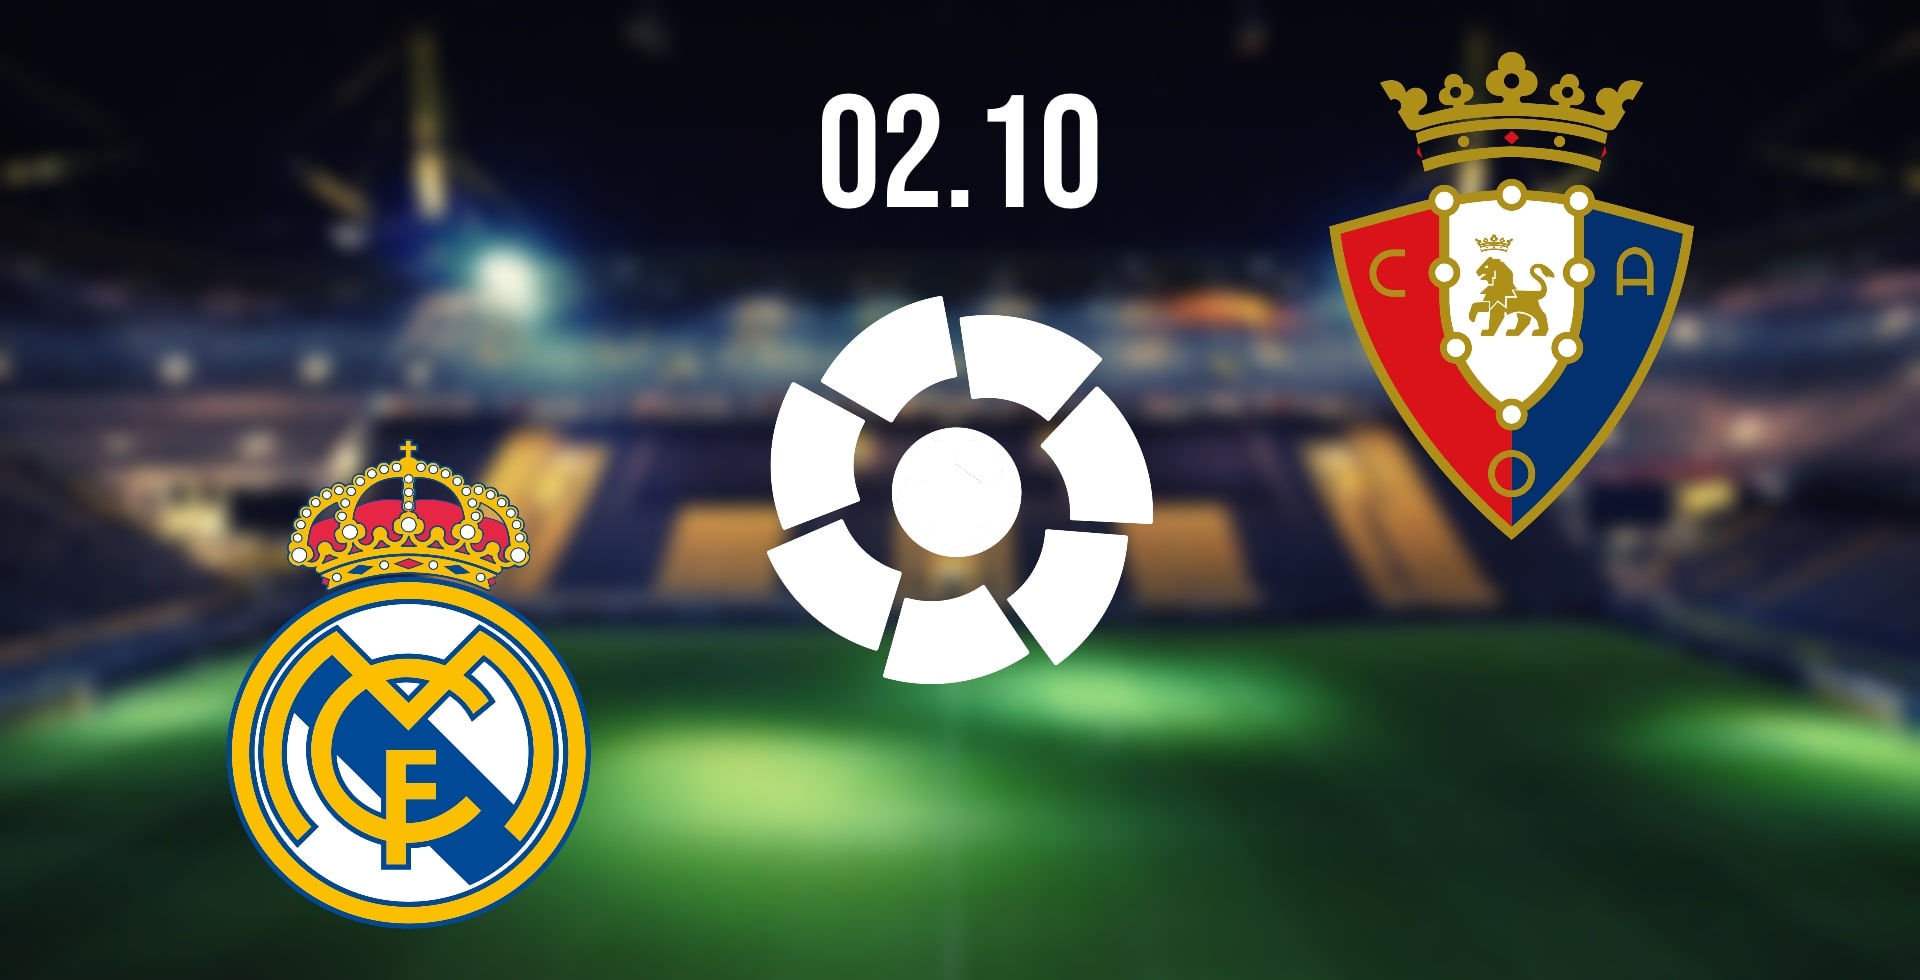 Real Madrid vs Osasuna Prediction: La Liga Match on 02.10.2022